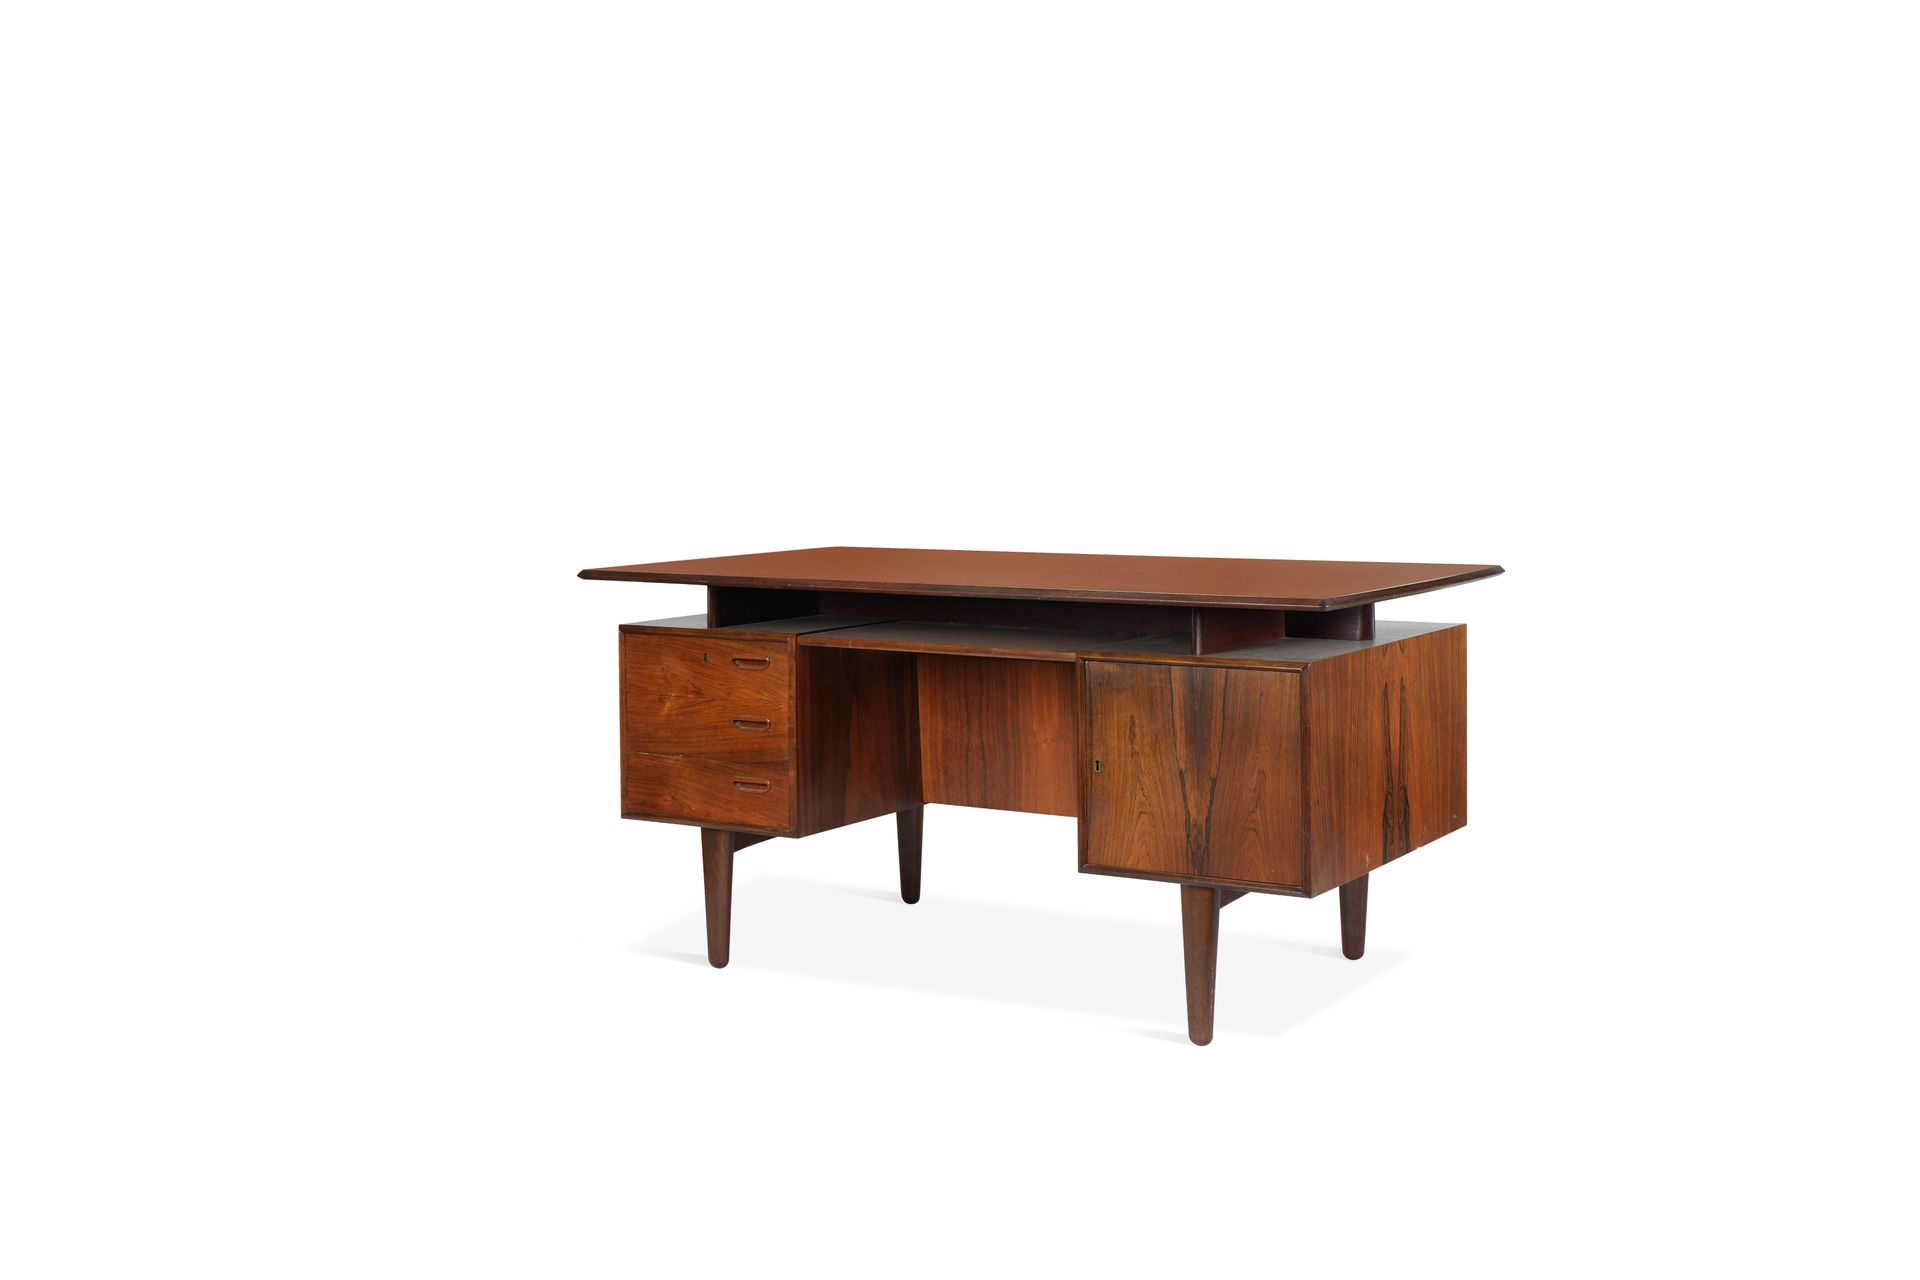 TRAVAIL SCANDINAVE Scandinavian work Wooden desk 73 x 145.5 x 74.5 cm. Circa 196&hellip;